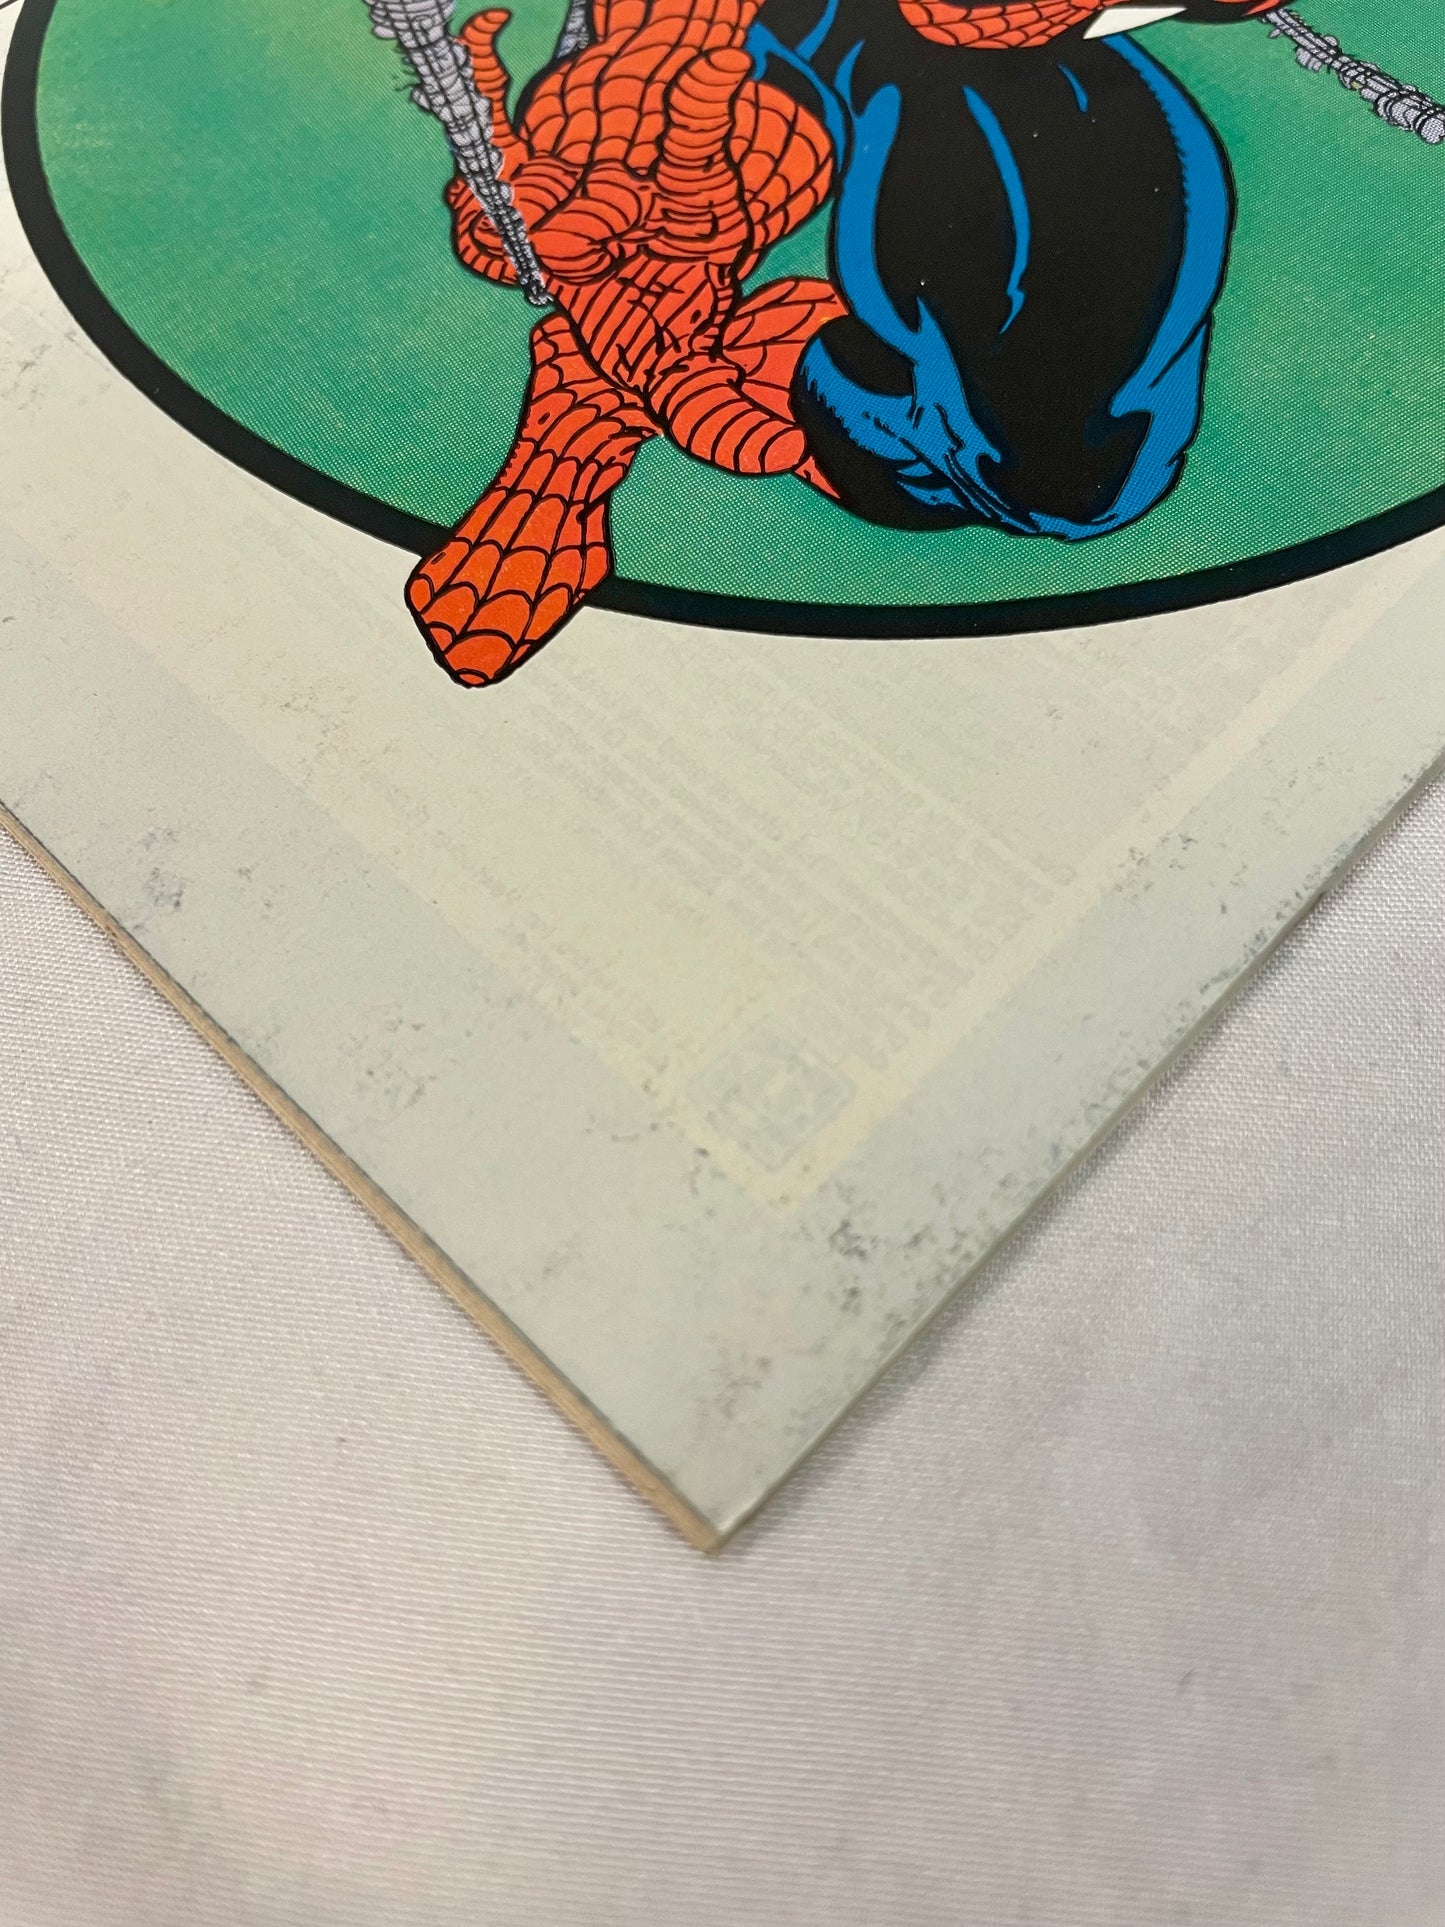 Marvel Comics Amazing Spider-Man #301